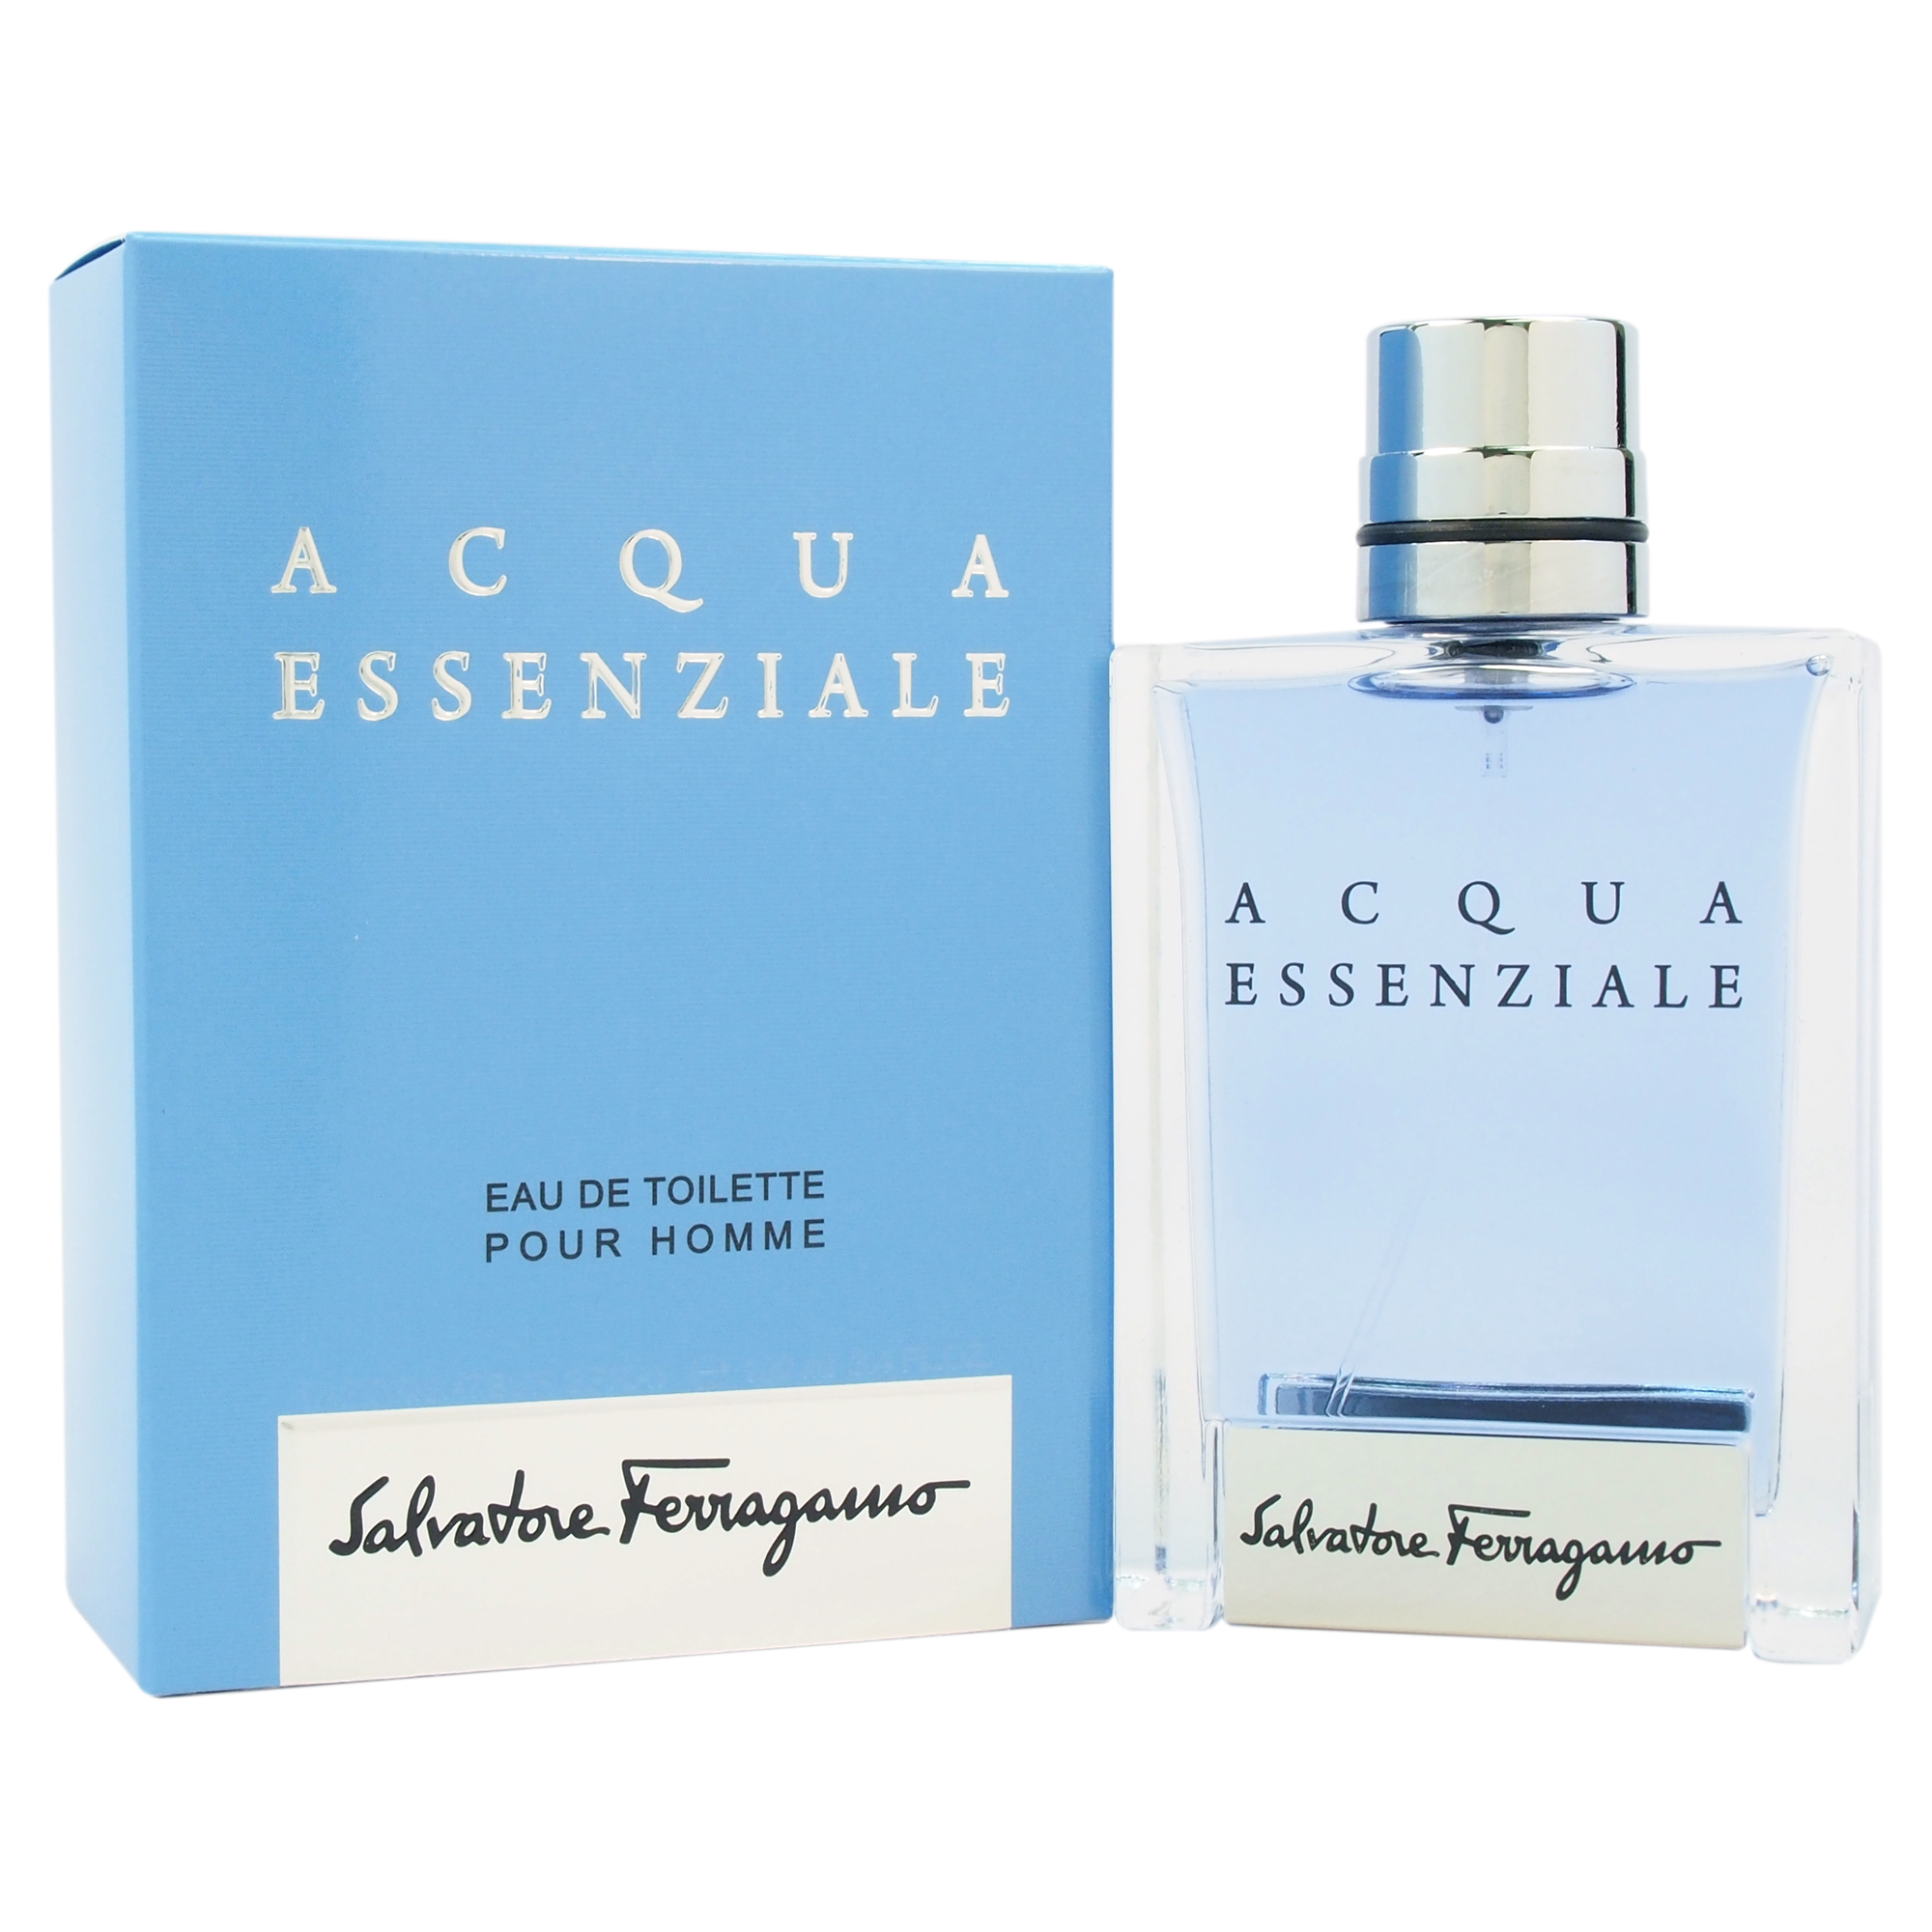 Acqua Essenziale by Salvatore Ferragamo for Men - 3.4 oz EDT Spray